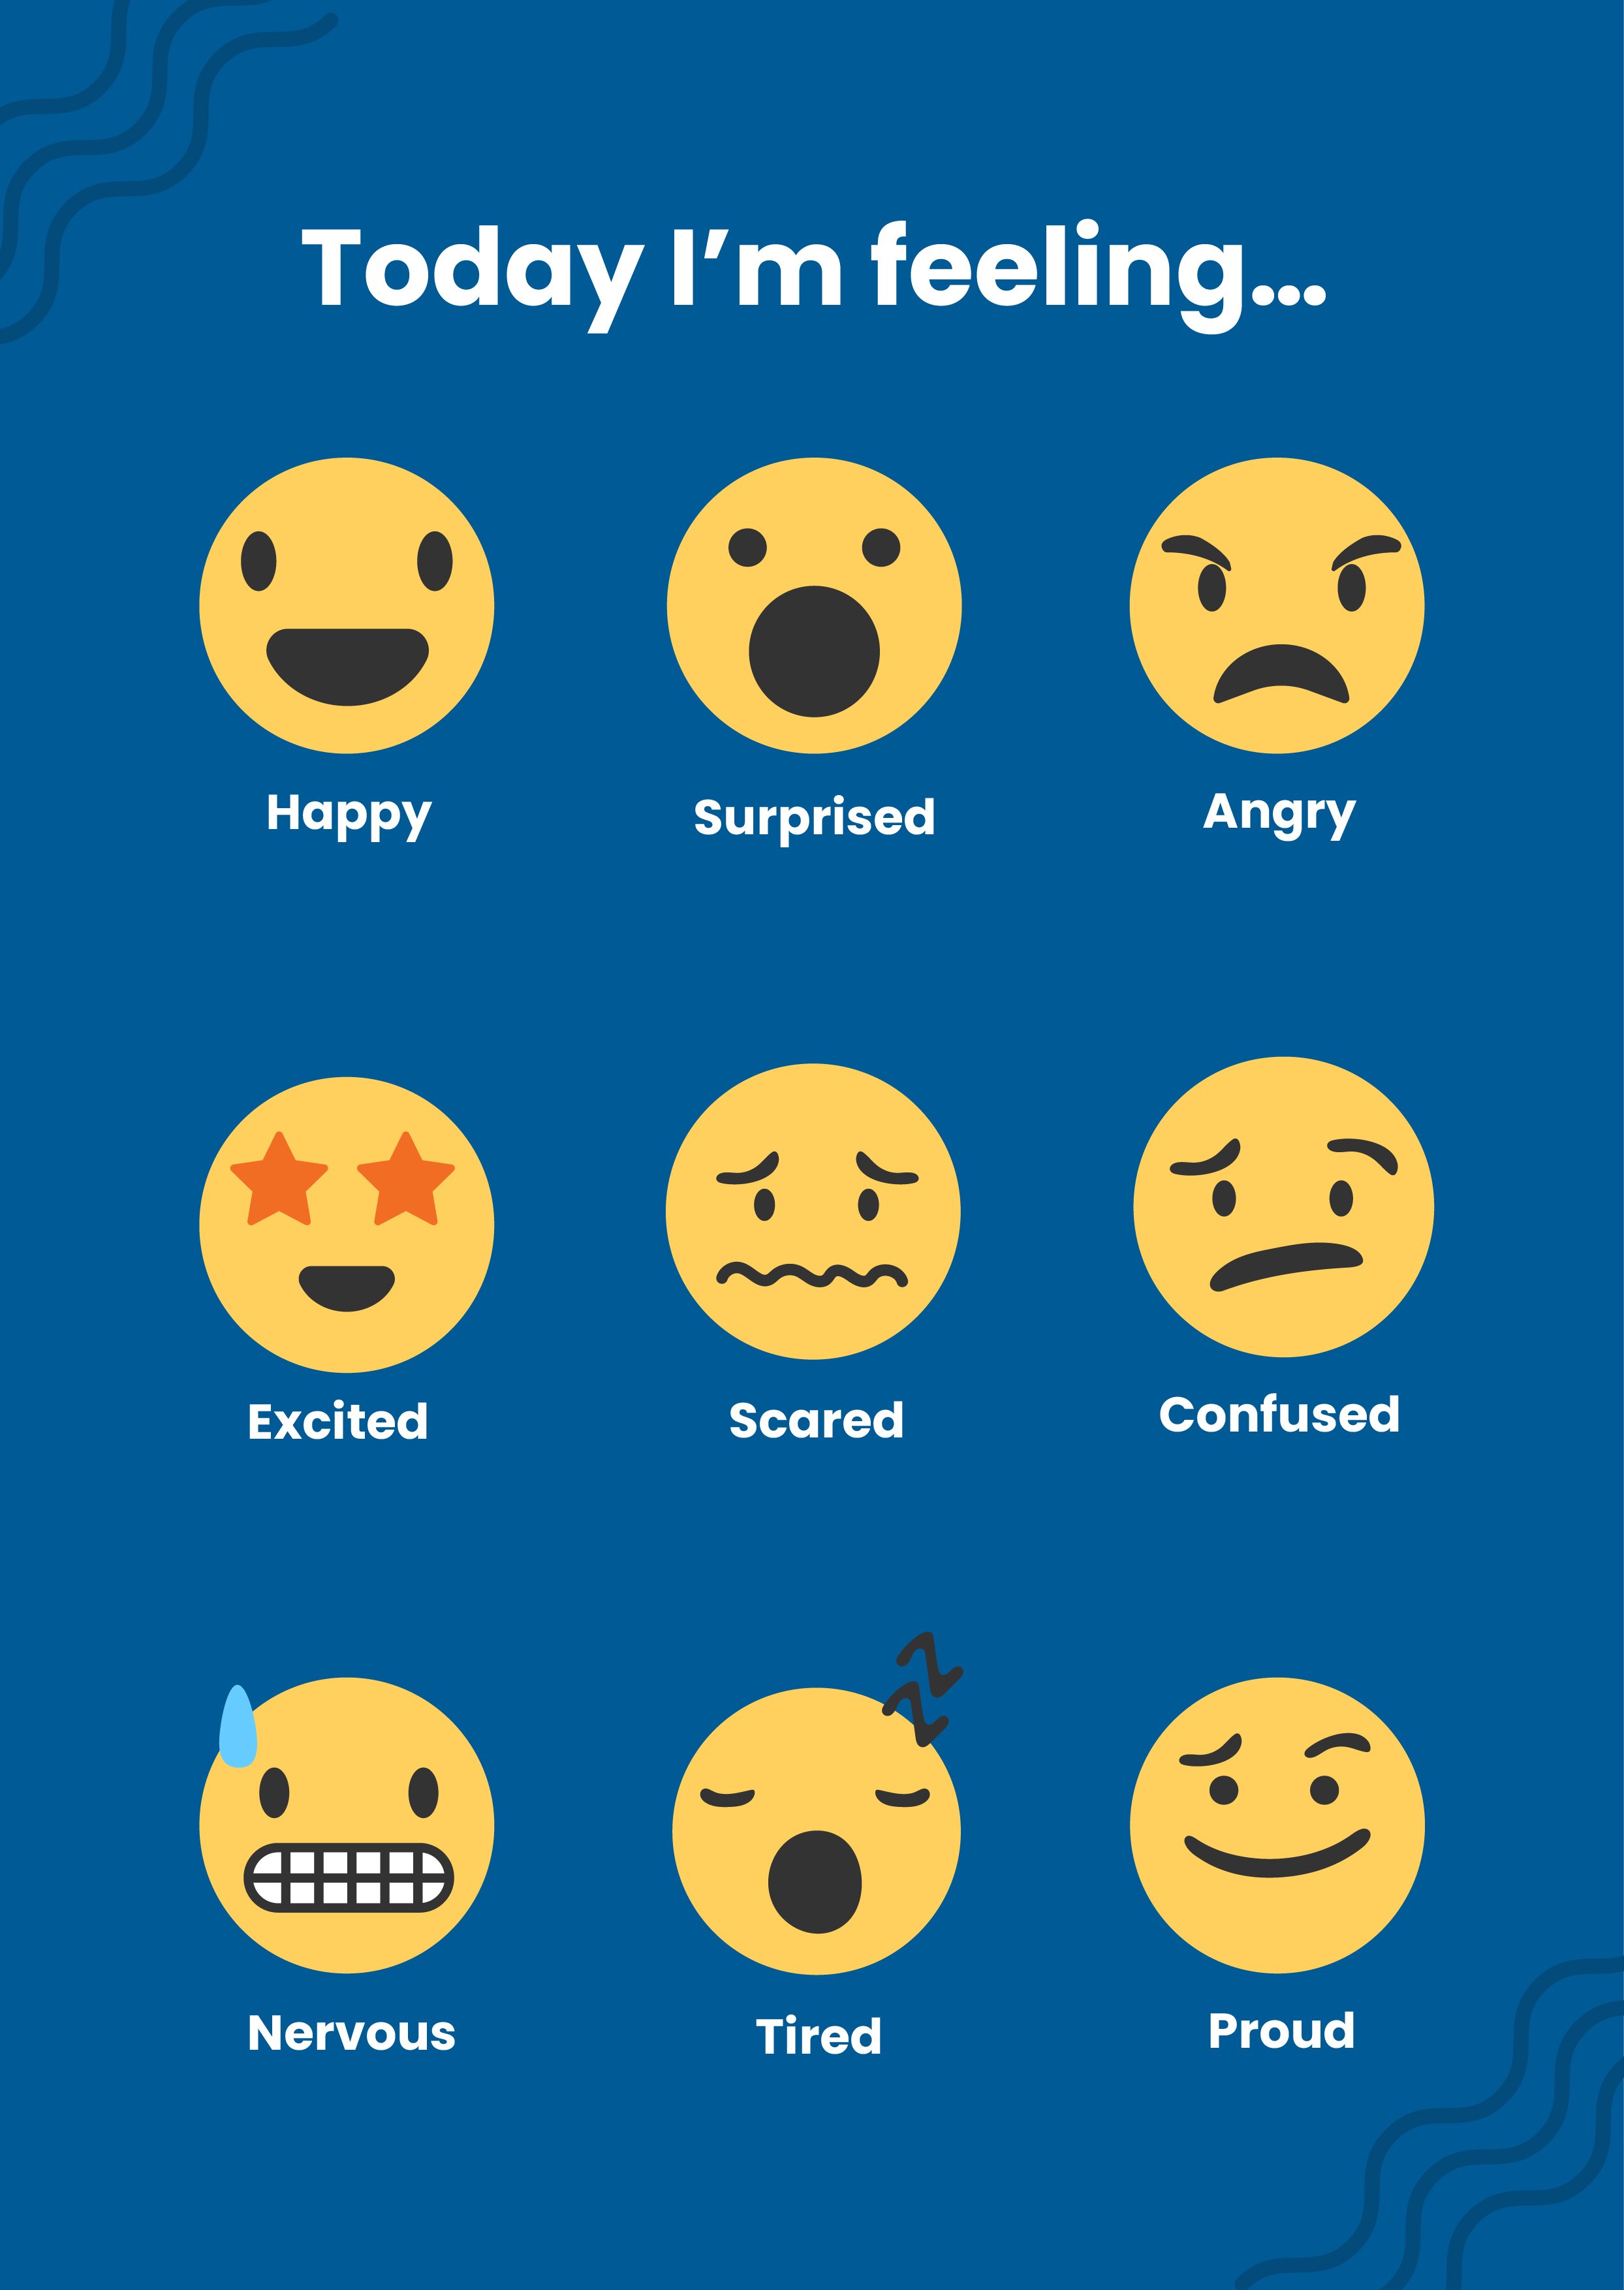 FREE Feelings Chart Template Download in PDF, Illustrator